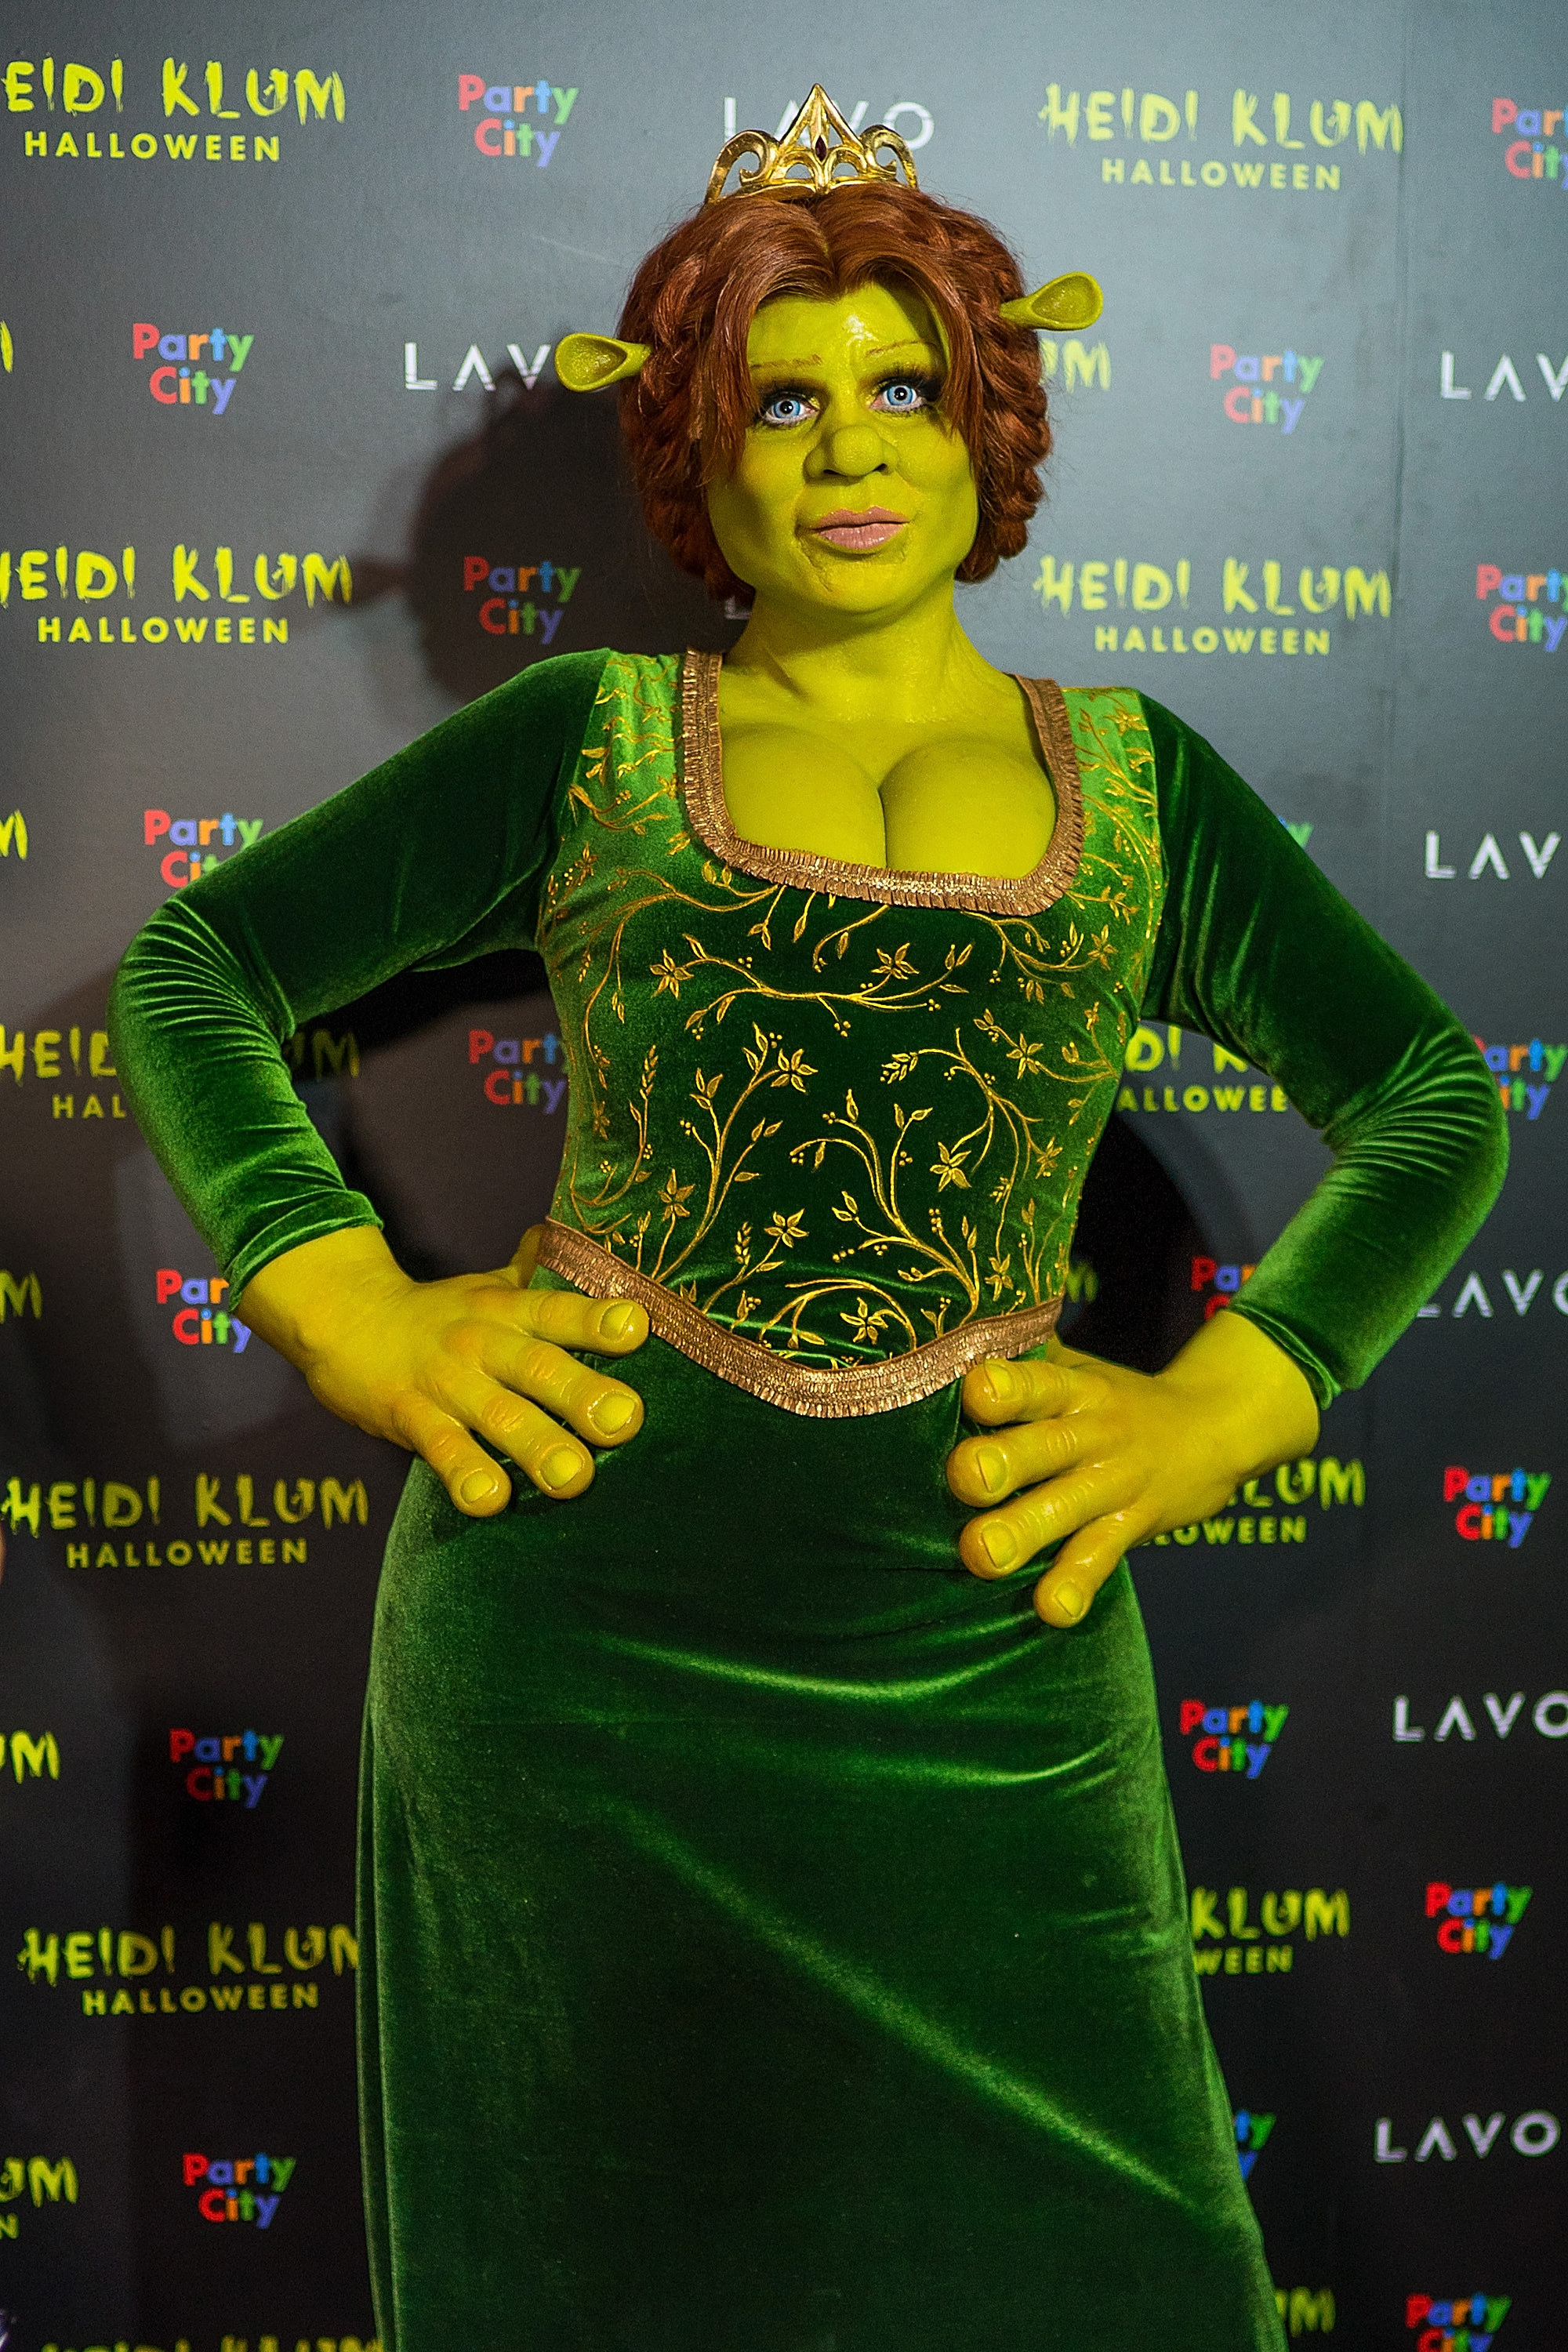 Heidi as Fiona from &quot;Shrek&quot;